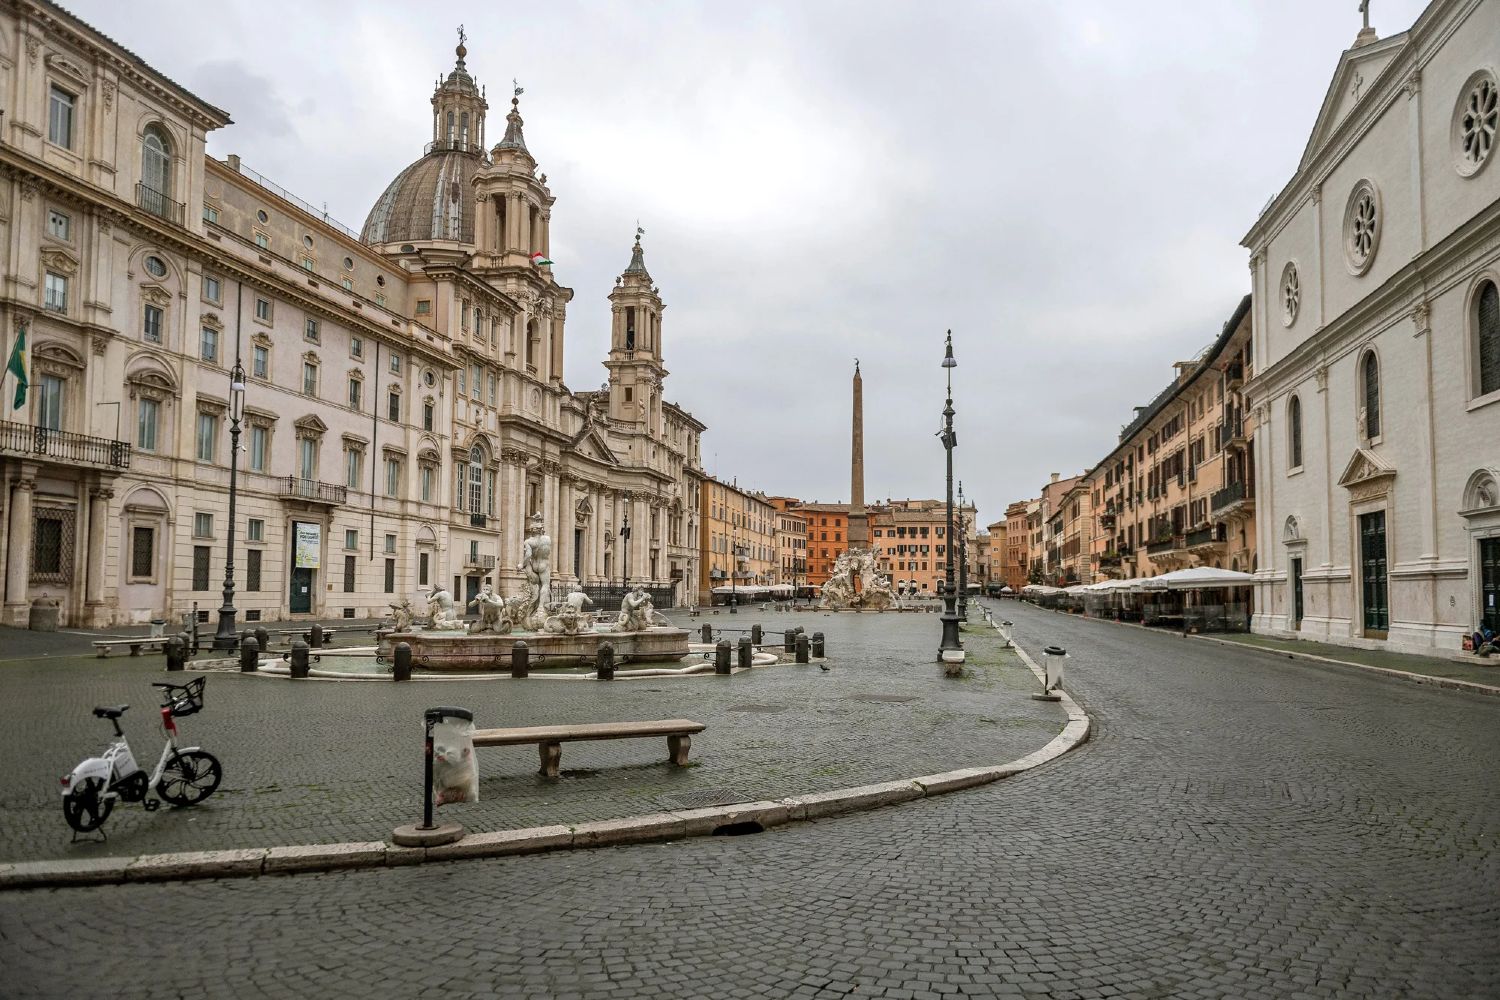 „Opustele“ ulice i trgovi u Rimu zbog virusa COVID-19, 14. mart 2020. (Foto: Antonio Masiello/Getty Images)